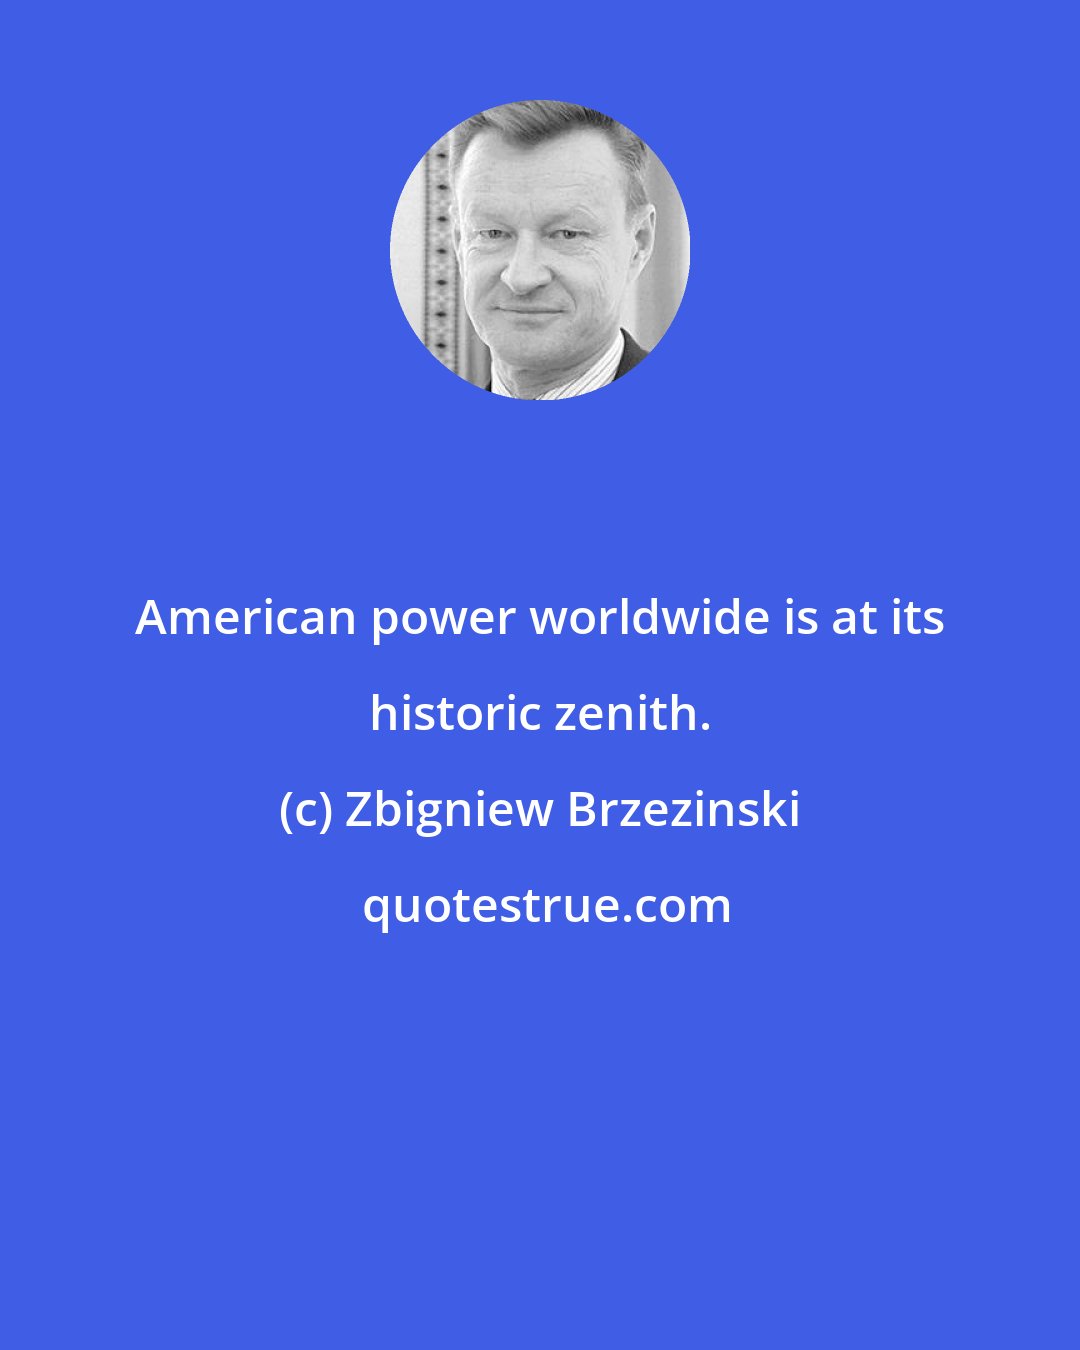 Zbigniew Brzezinski: American power worldwide is at its historic zenith.